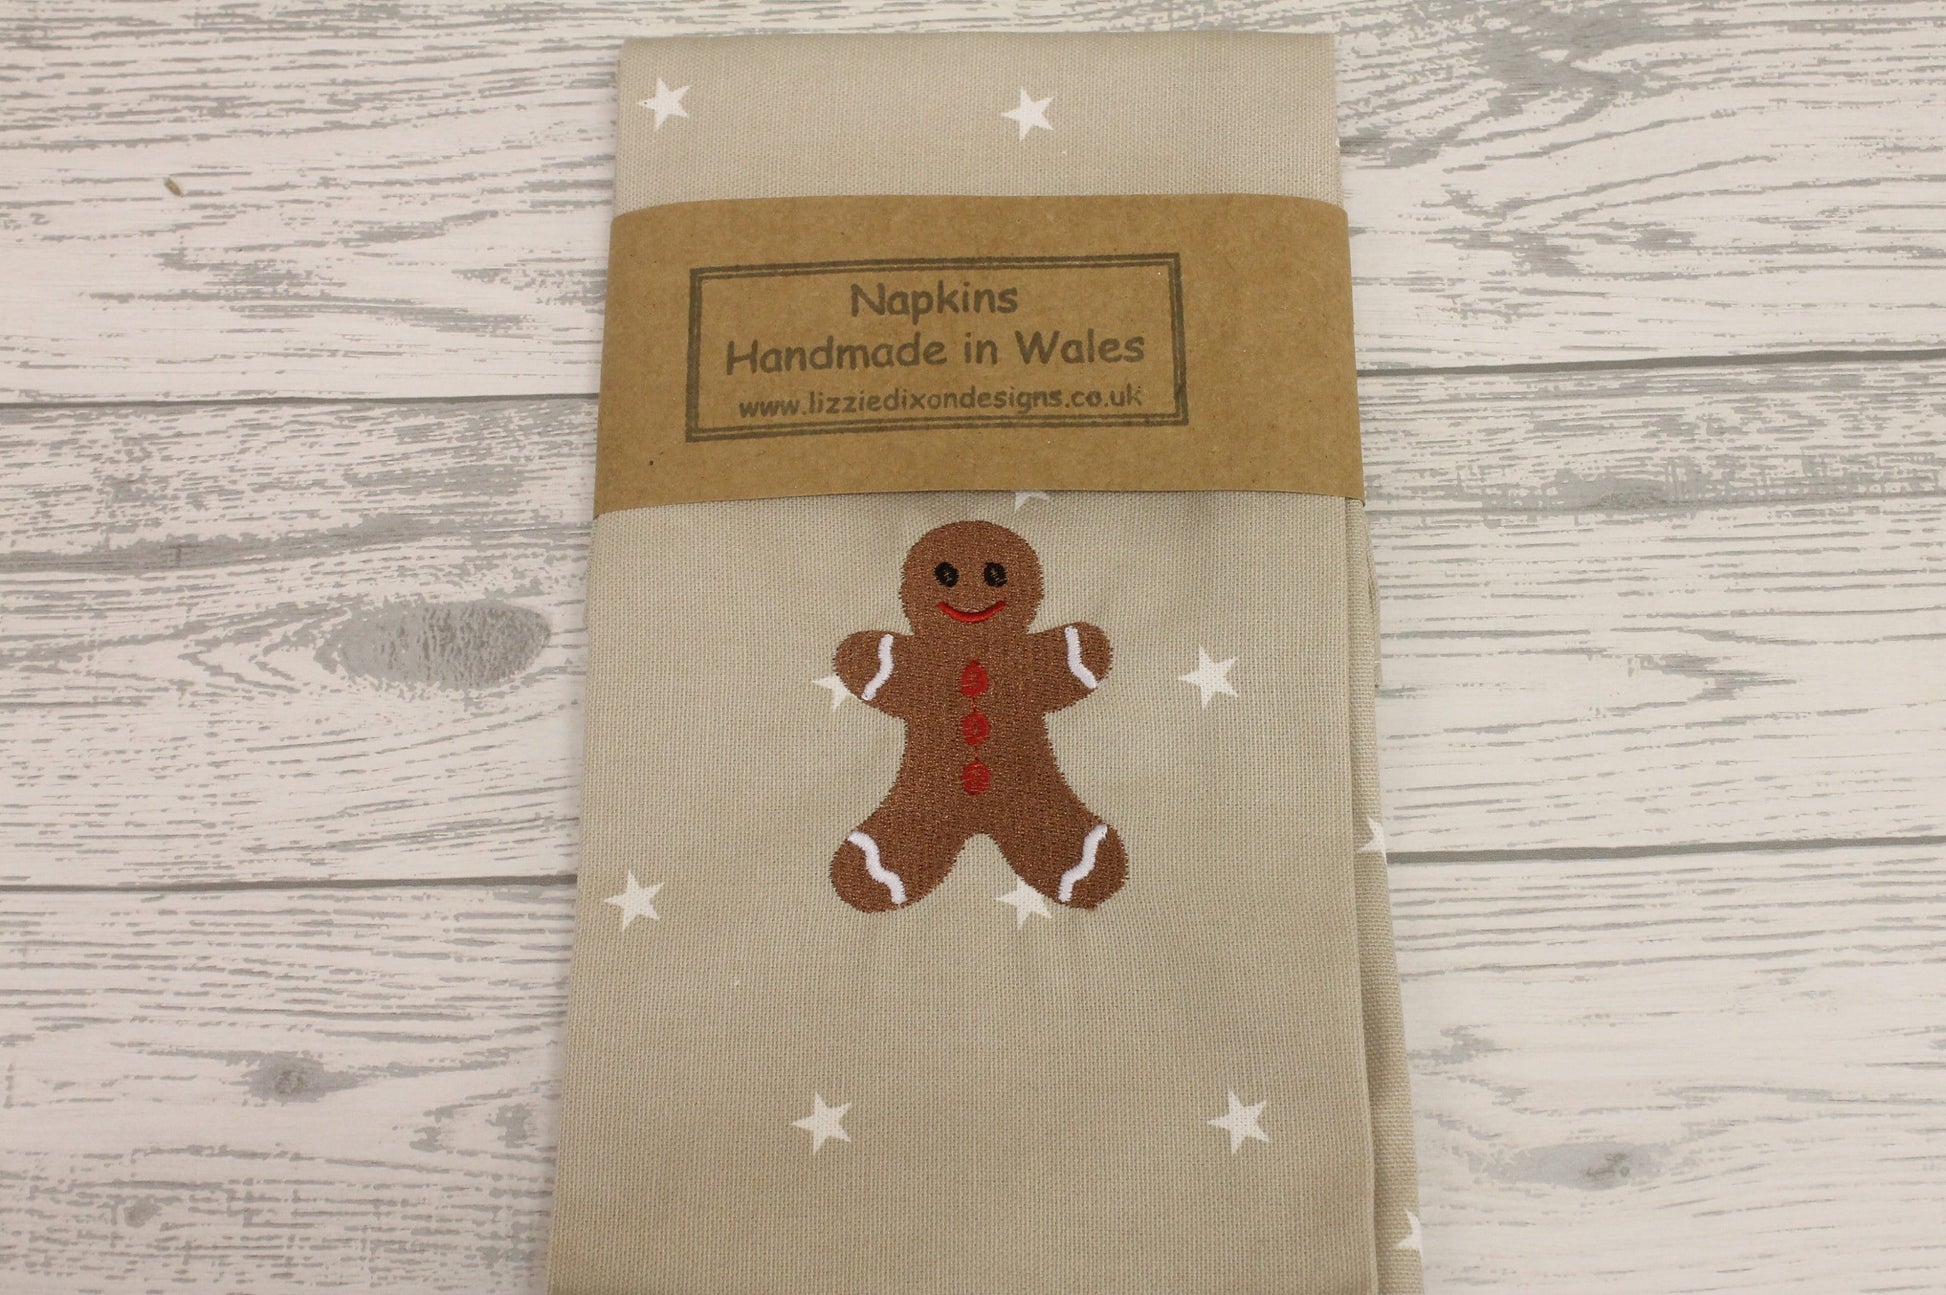 Christmas Napkins - Festive table- Christmas Gingerbread Man Napkins -Handmade festive Taupe Napkins.